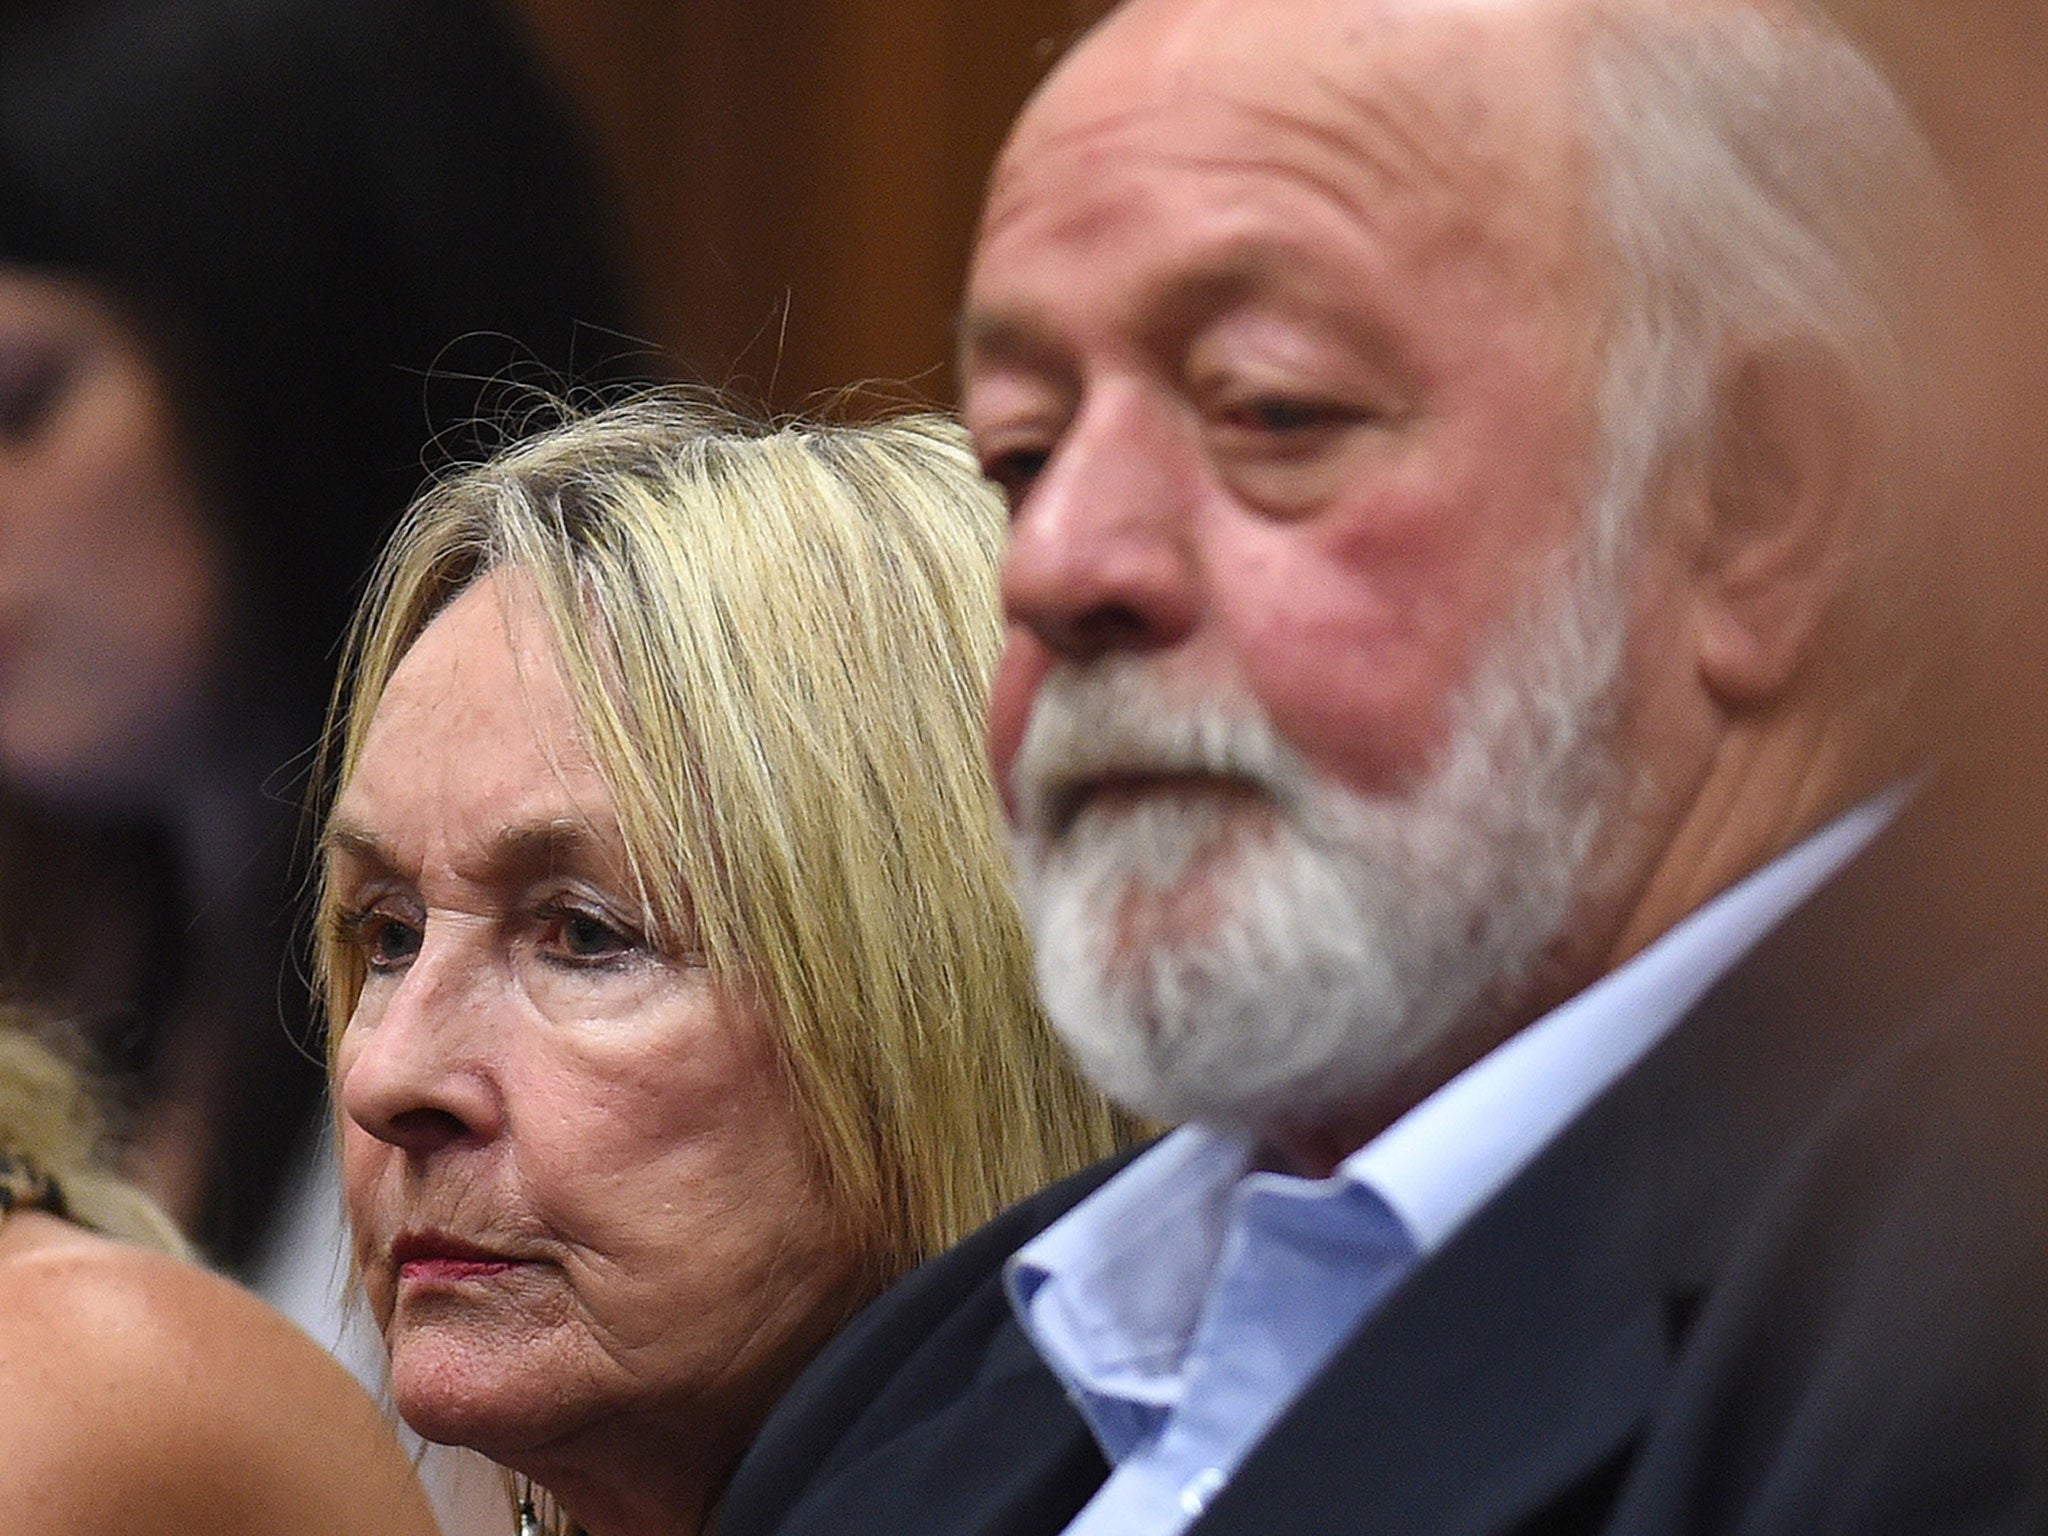 Reeva Steenkamp's parents, Barry Steenkamp and June Steenkamp sit in the Pretoria High Court in South Africa.